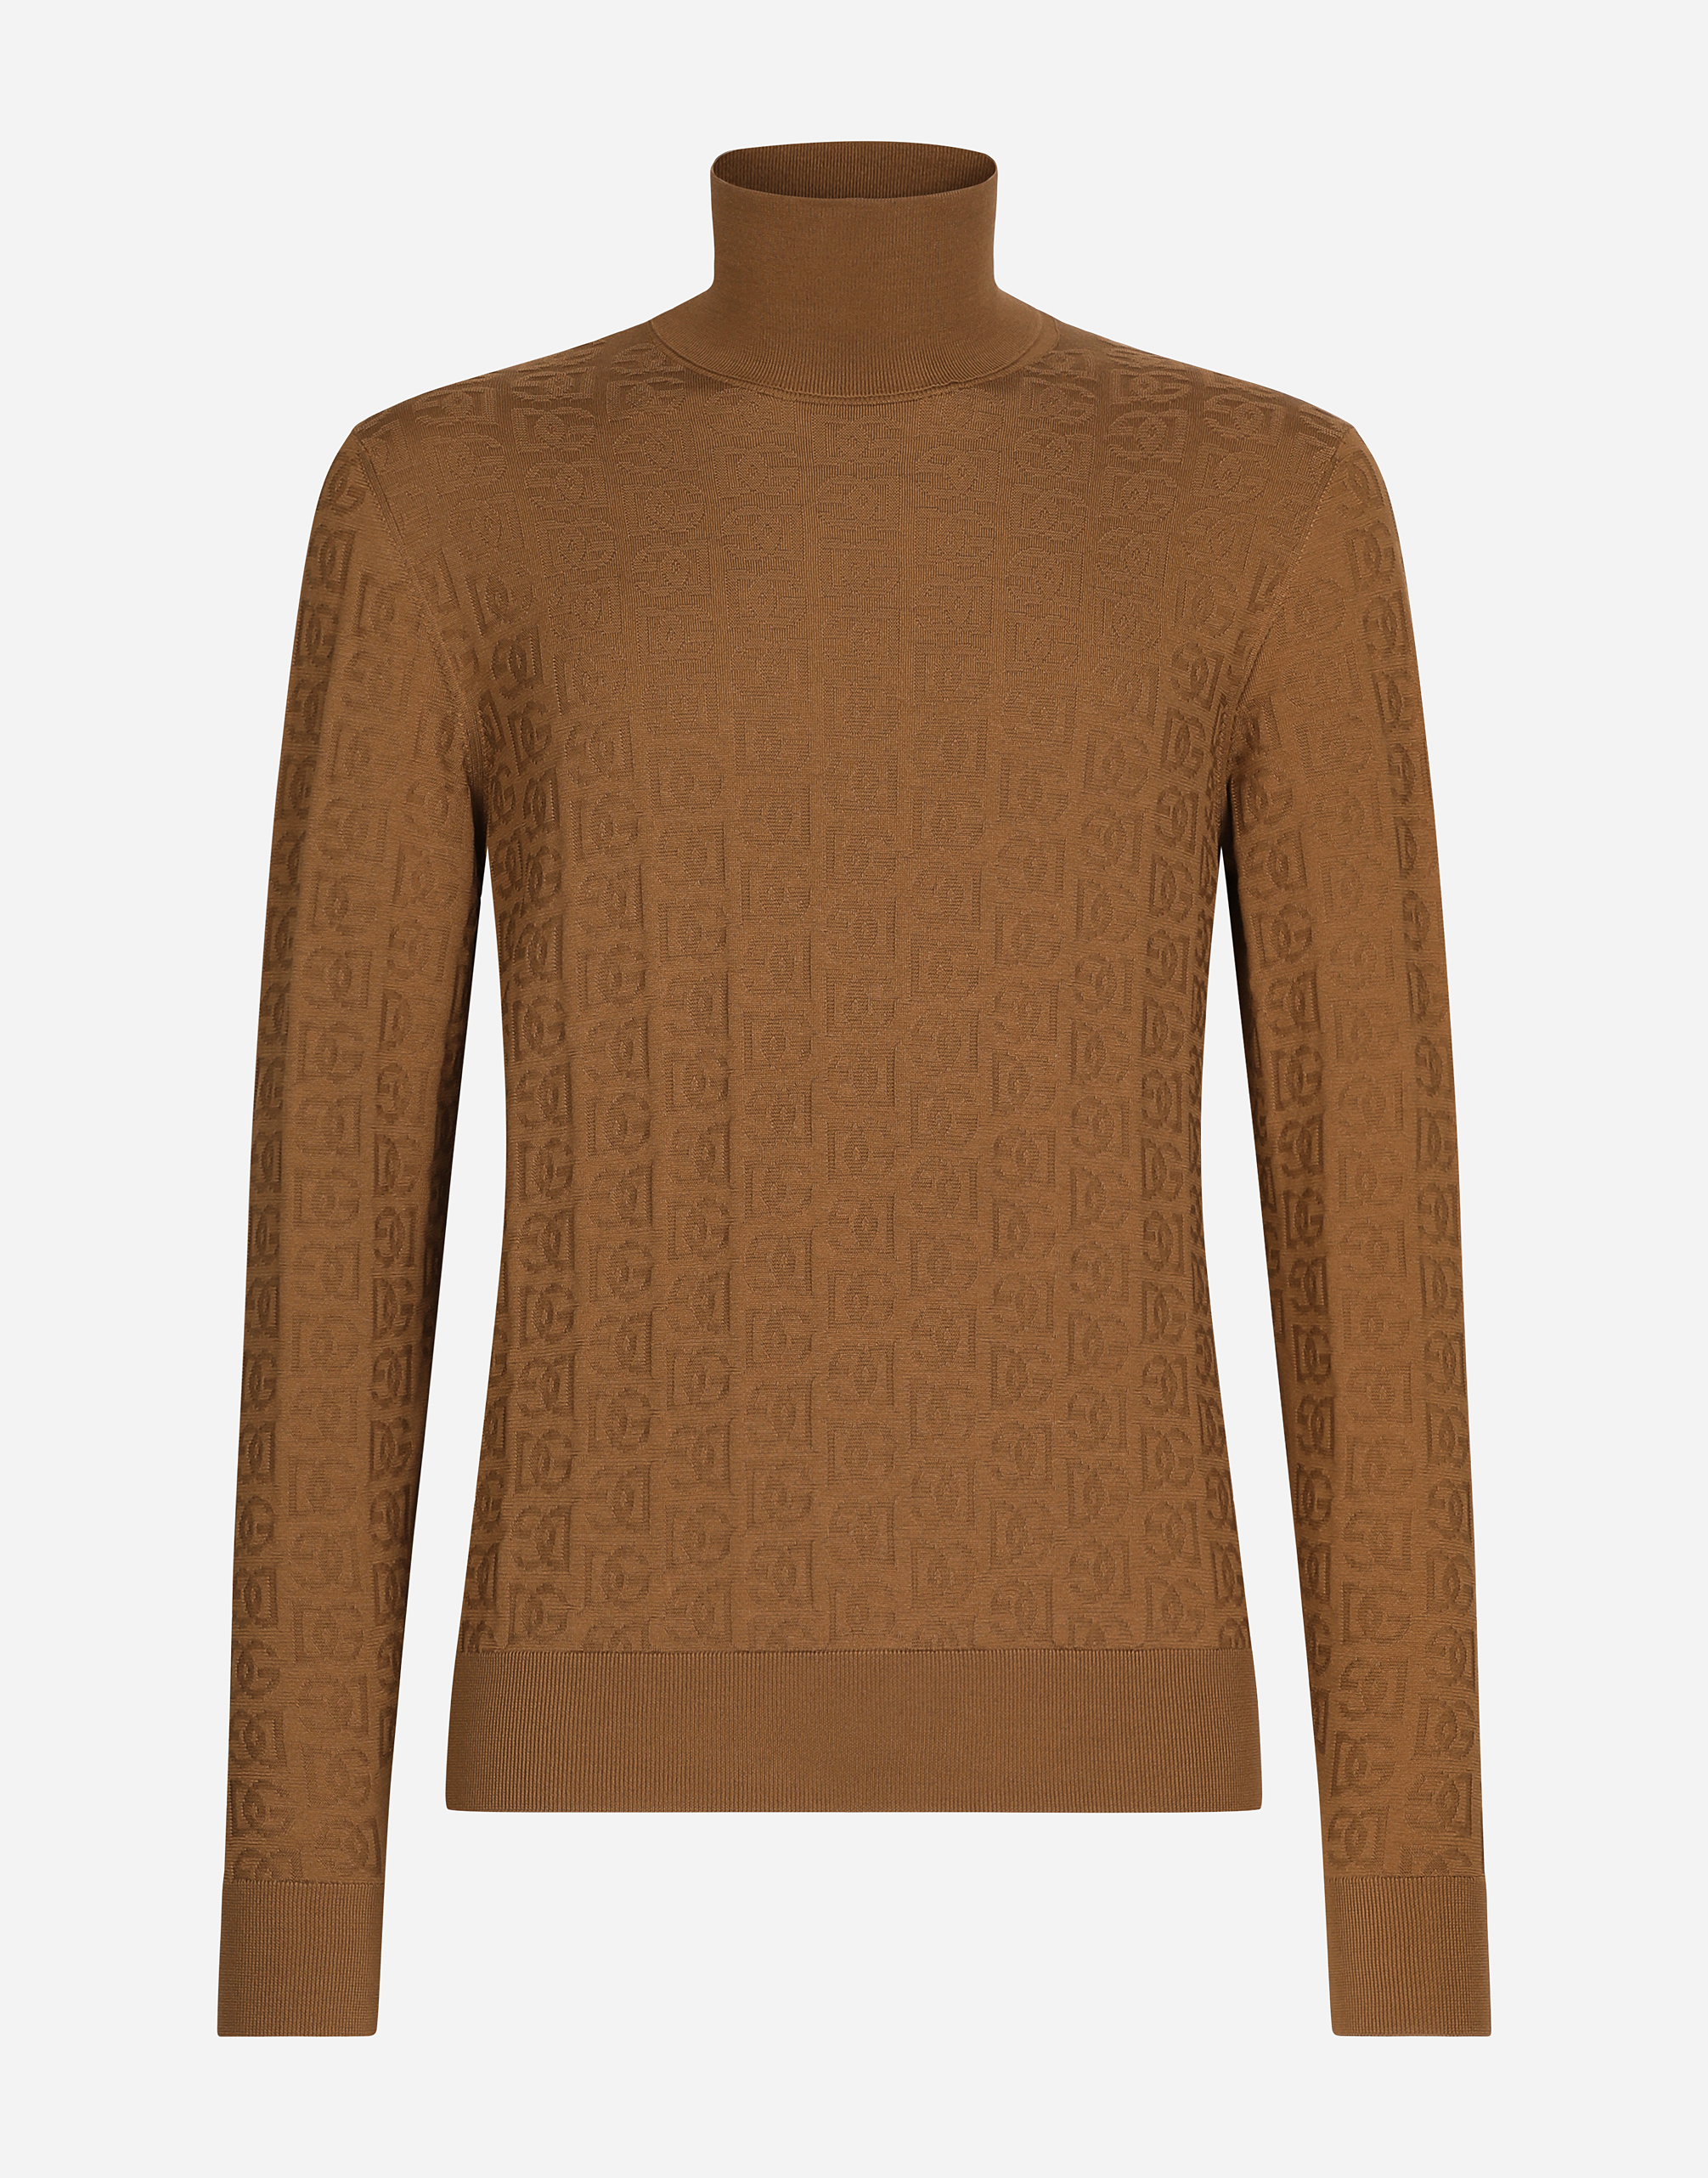 Silk jacquard turtleneck sweater with DG logo in Beige